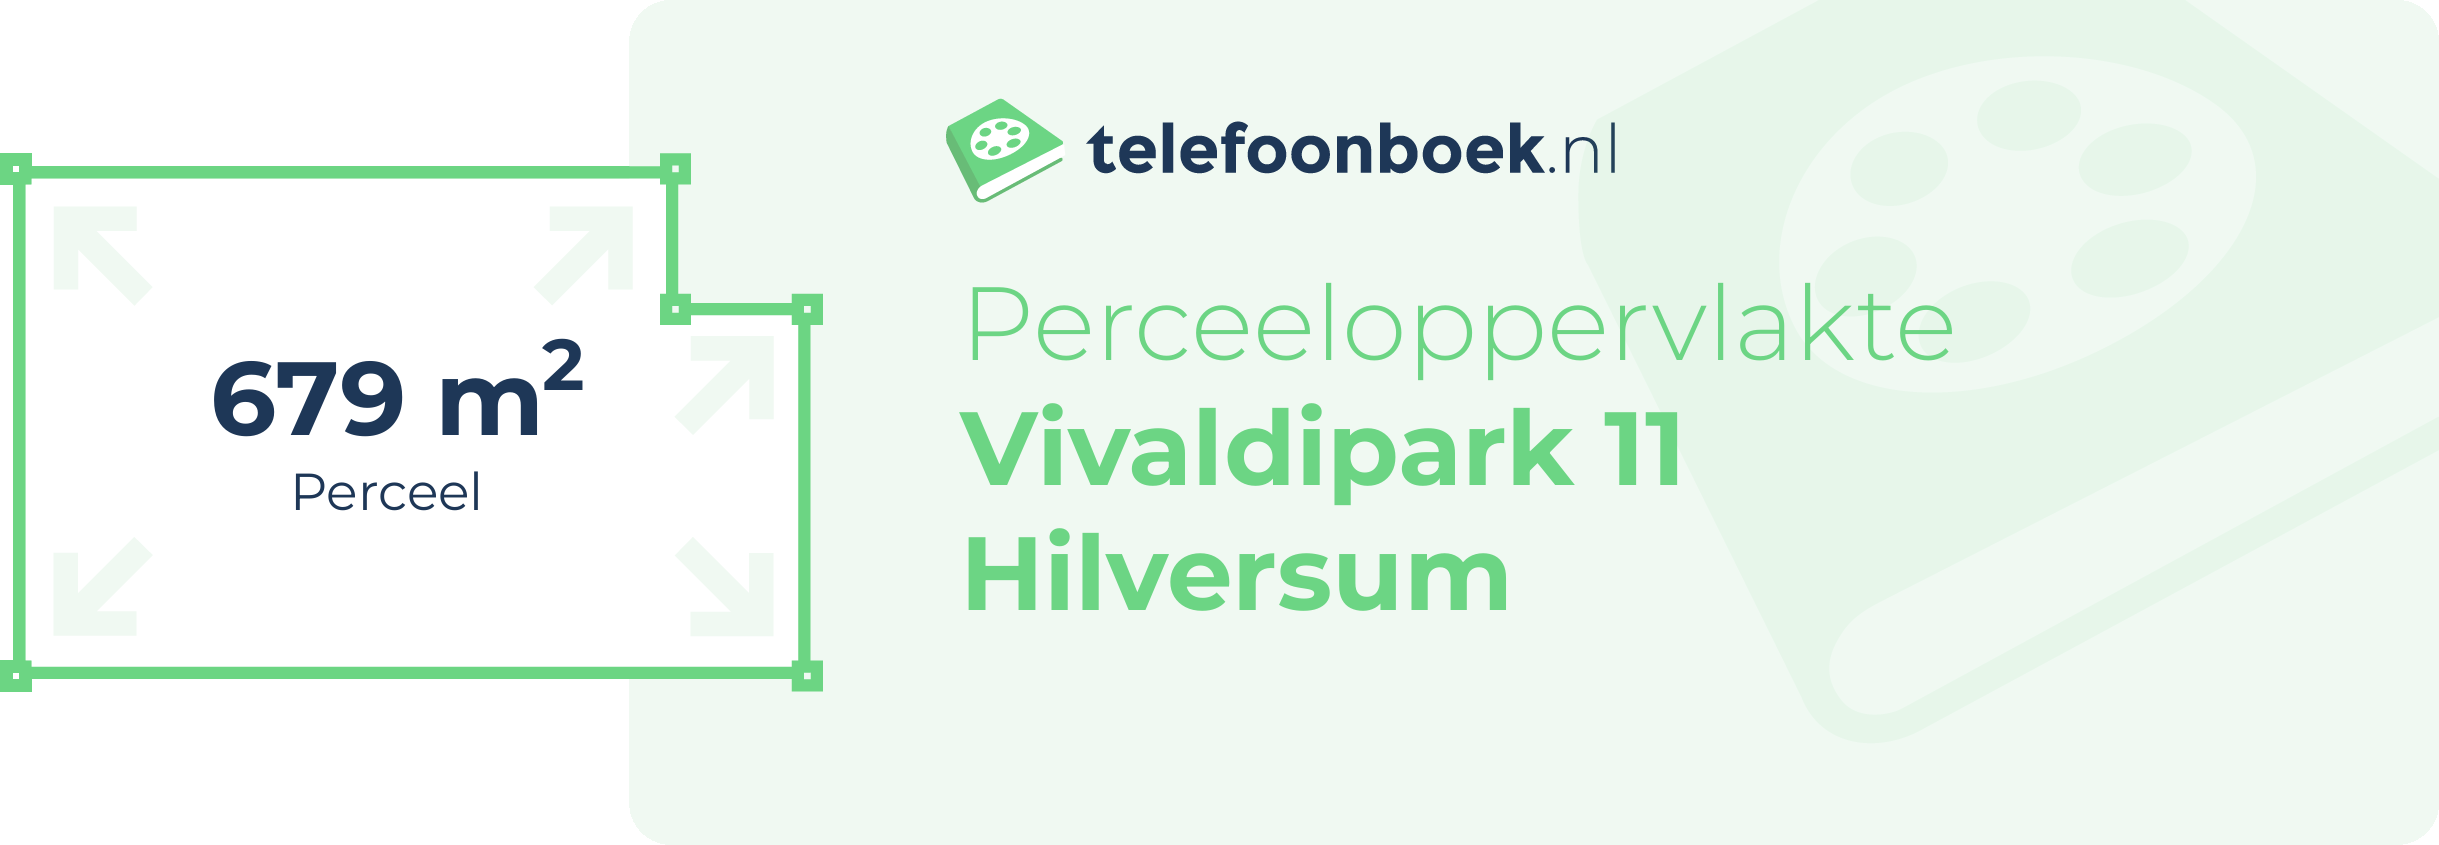 Perceeloppervlakte Vivaldipark 11 Hilversum